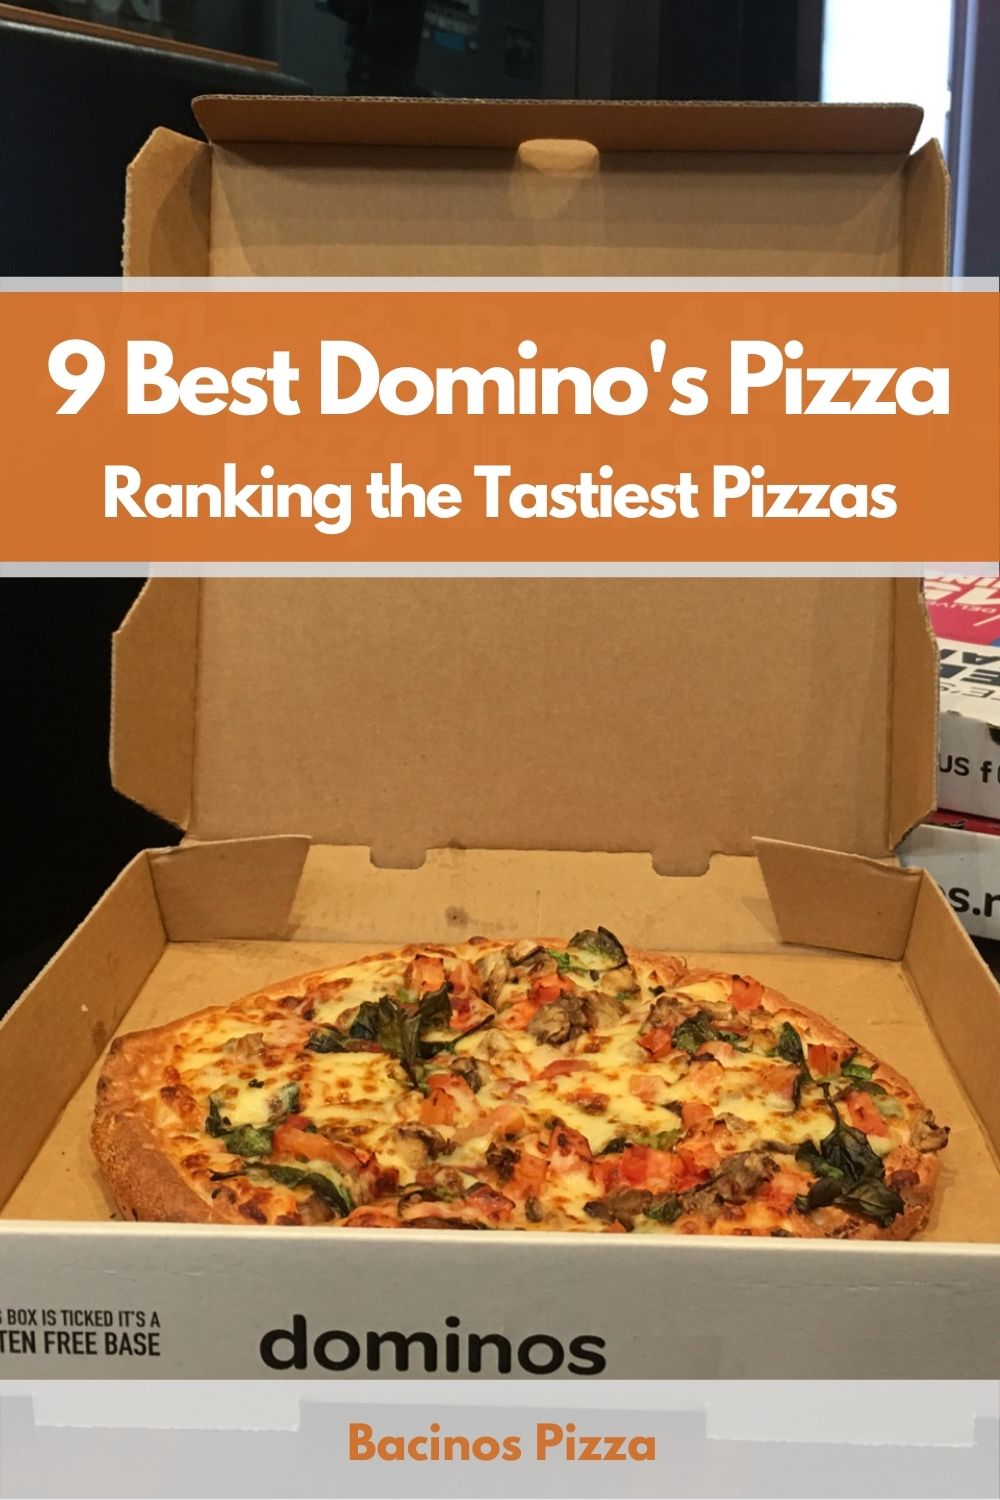 9 Best Domino's Pizza – Ranking the Tastiest Pizzas pin 2